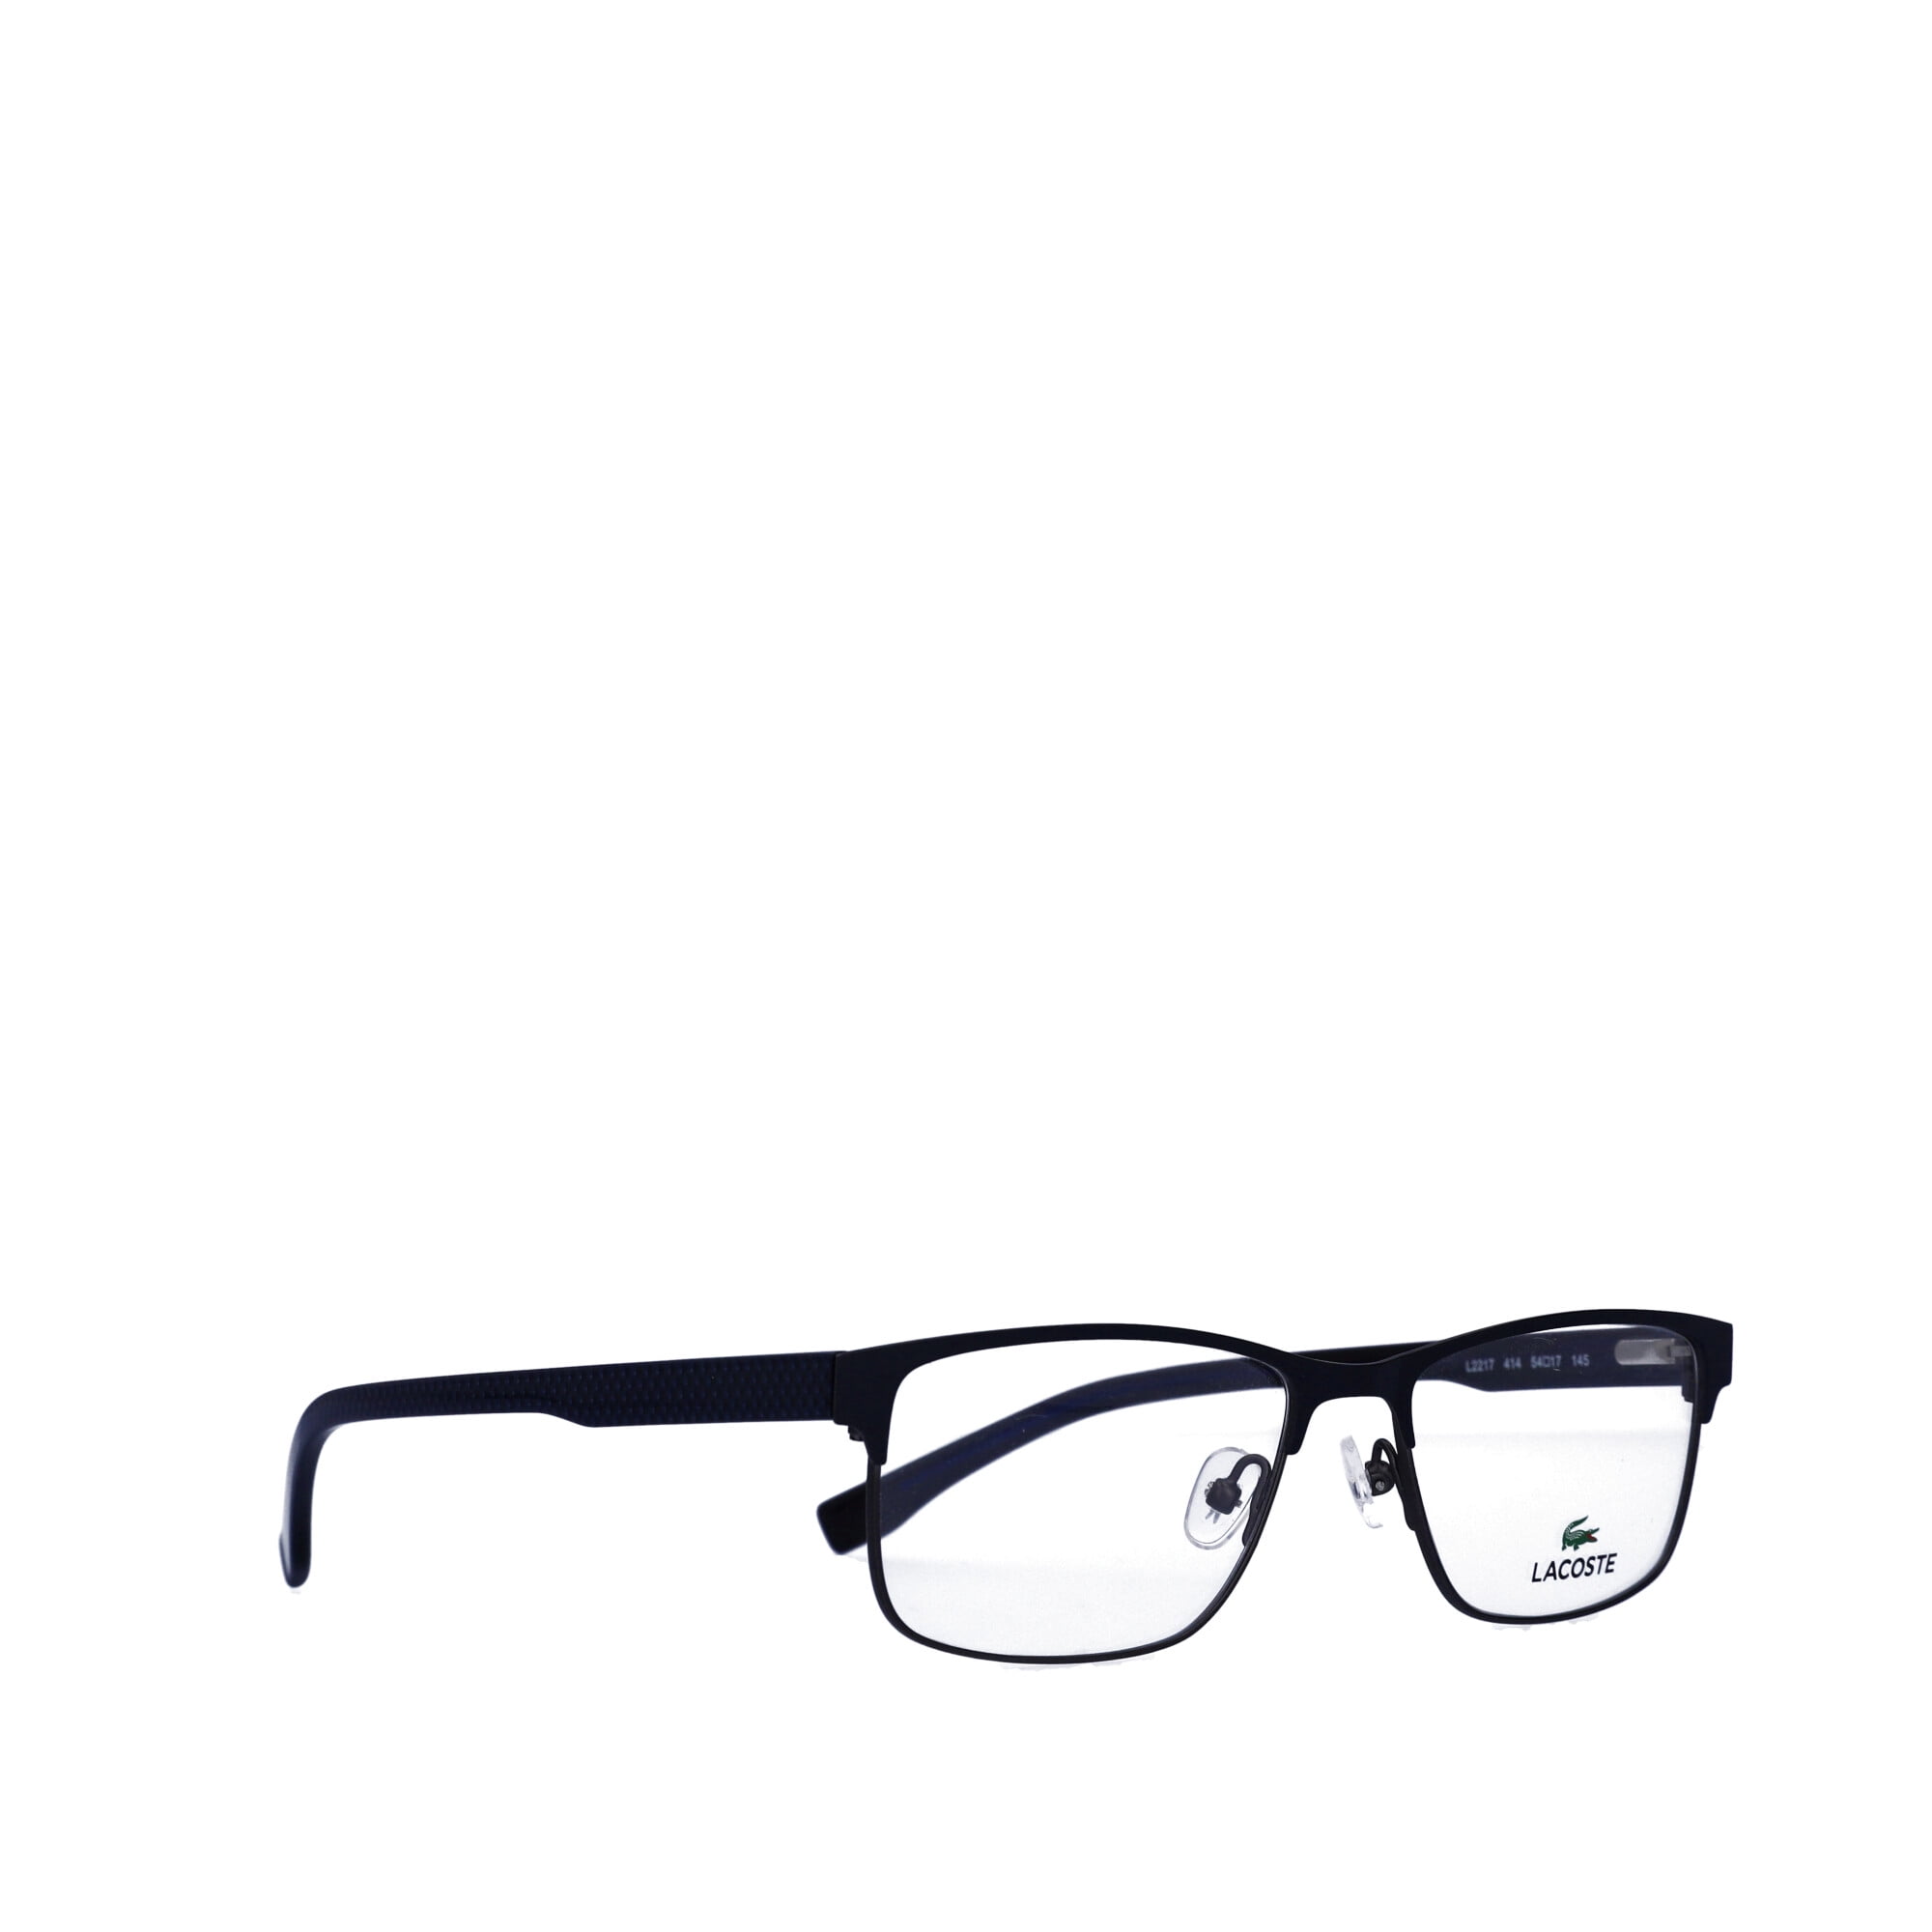 Lacoste Men's Rectangular Eyeglasses, L2217G, Blue, 52-17-140, with ...